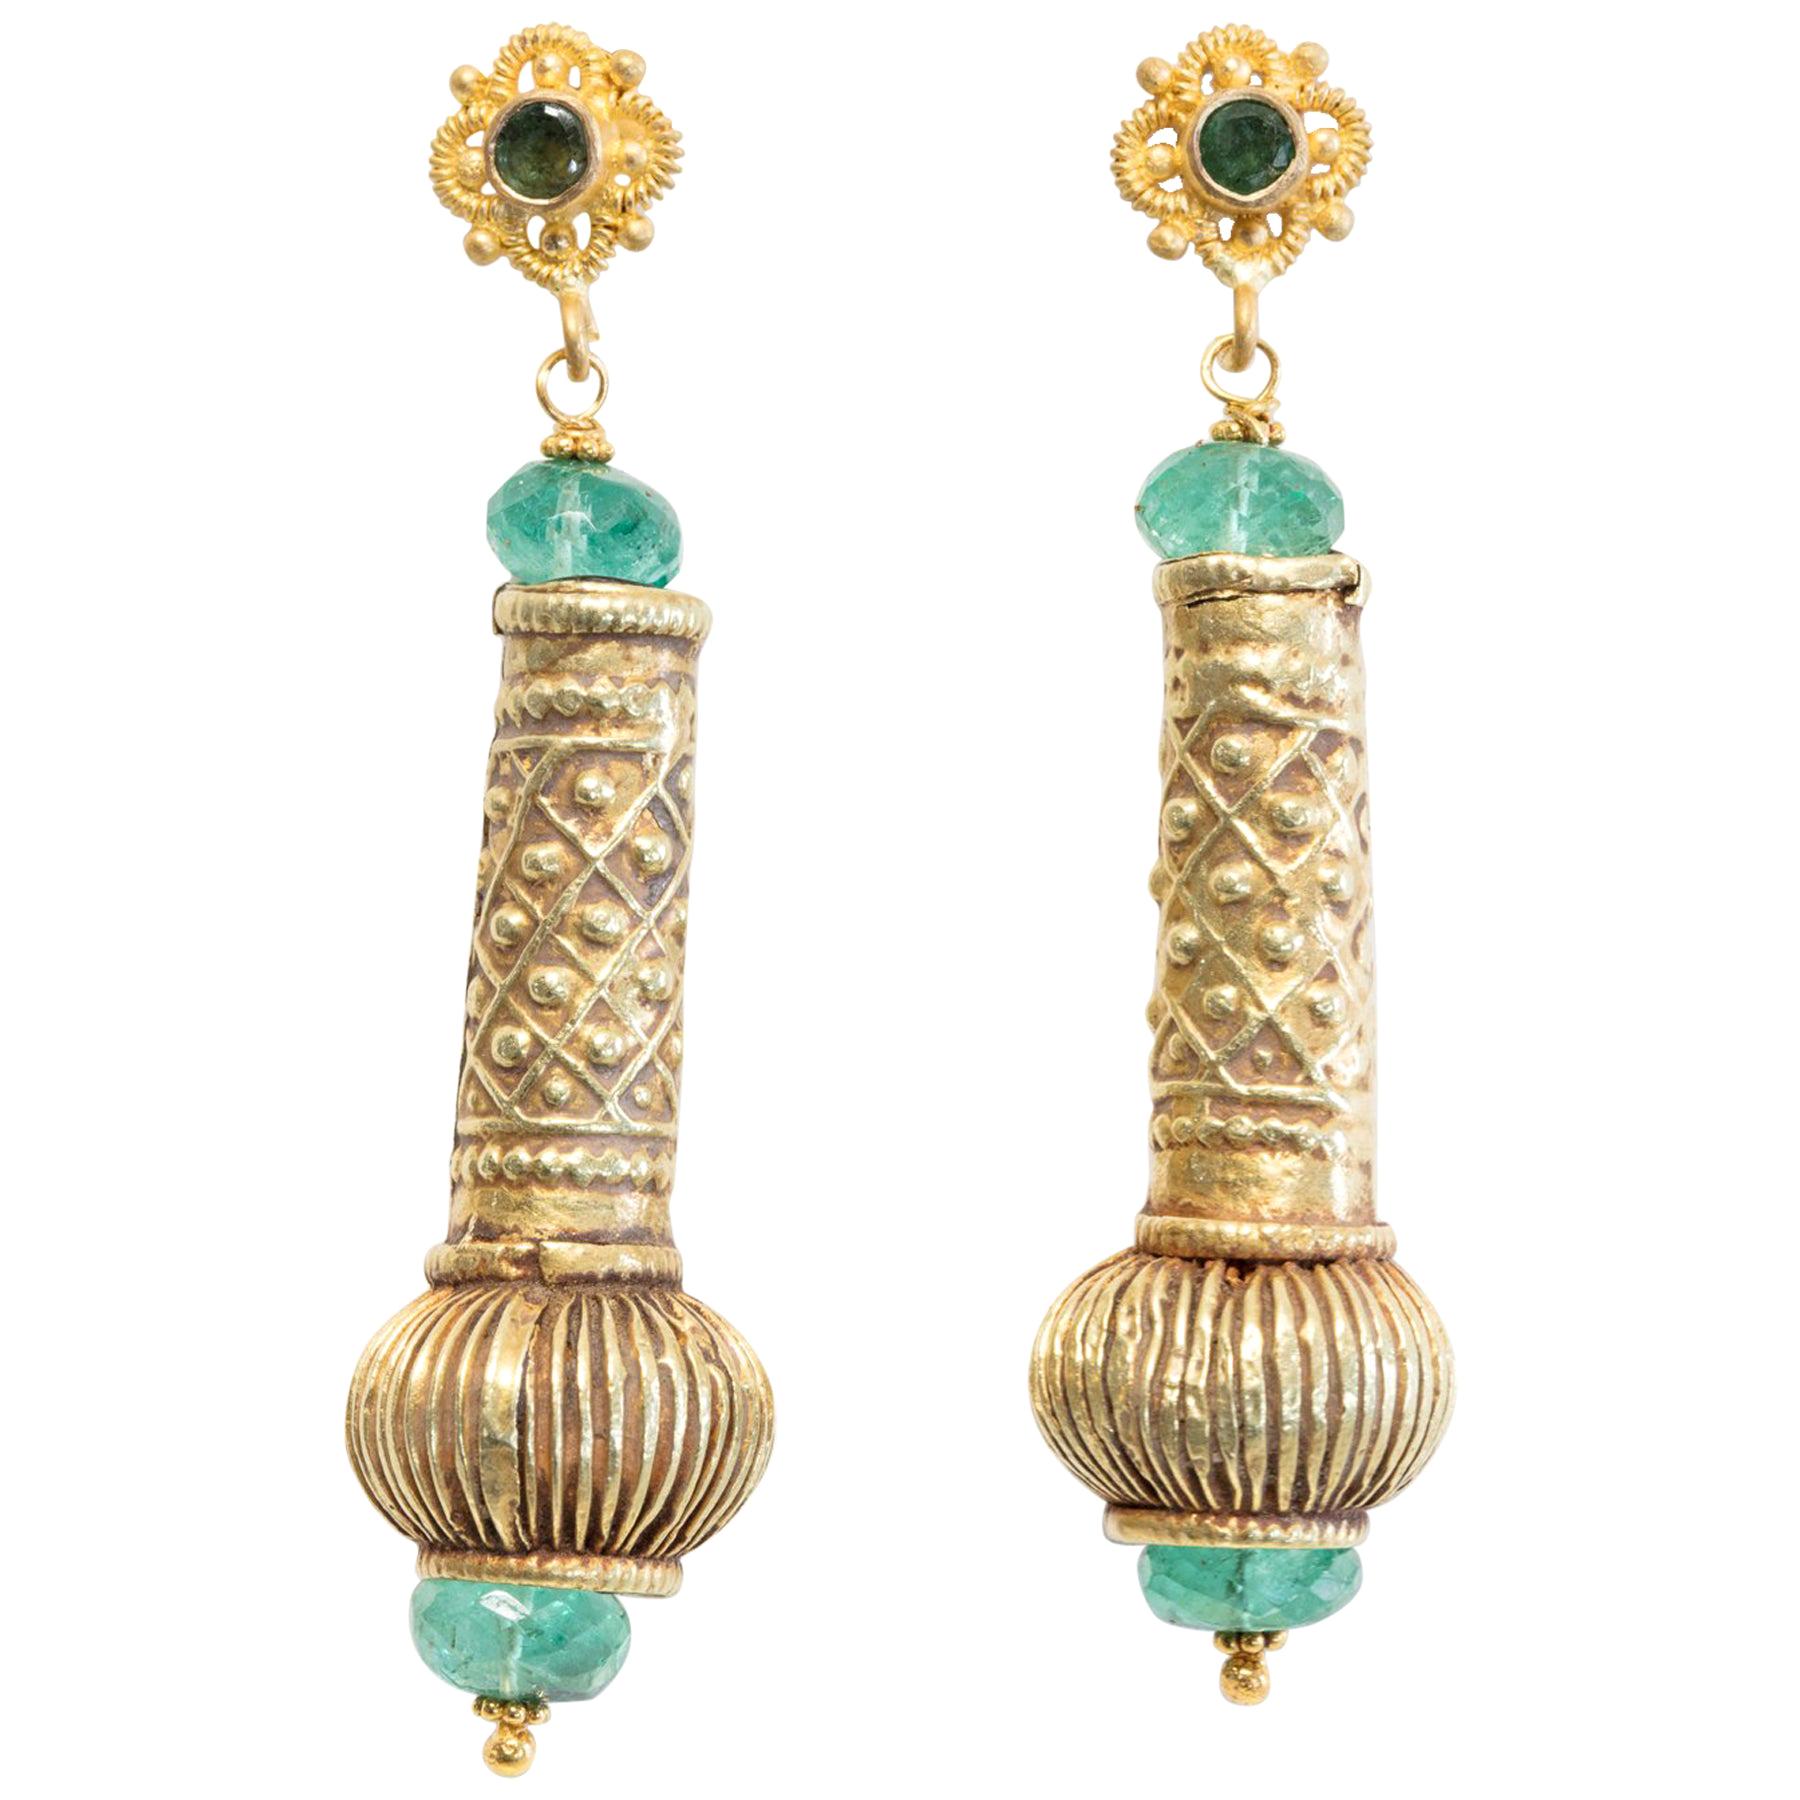 22 Karat Gold and Emerald Earrings by Deborah Lockhart Phillips